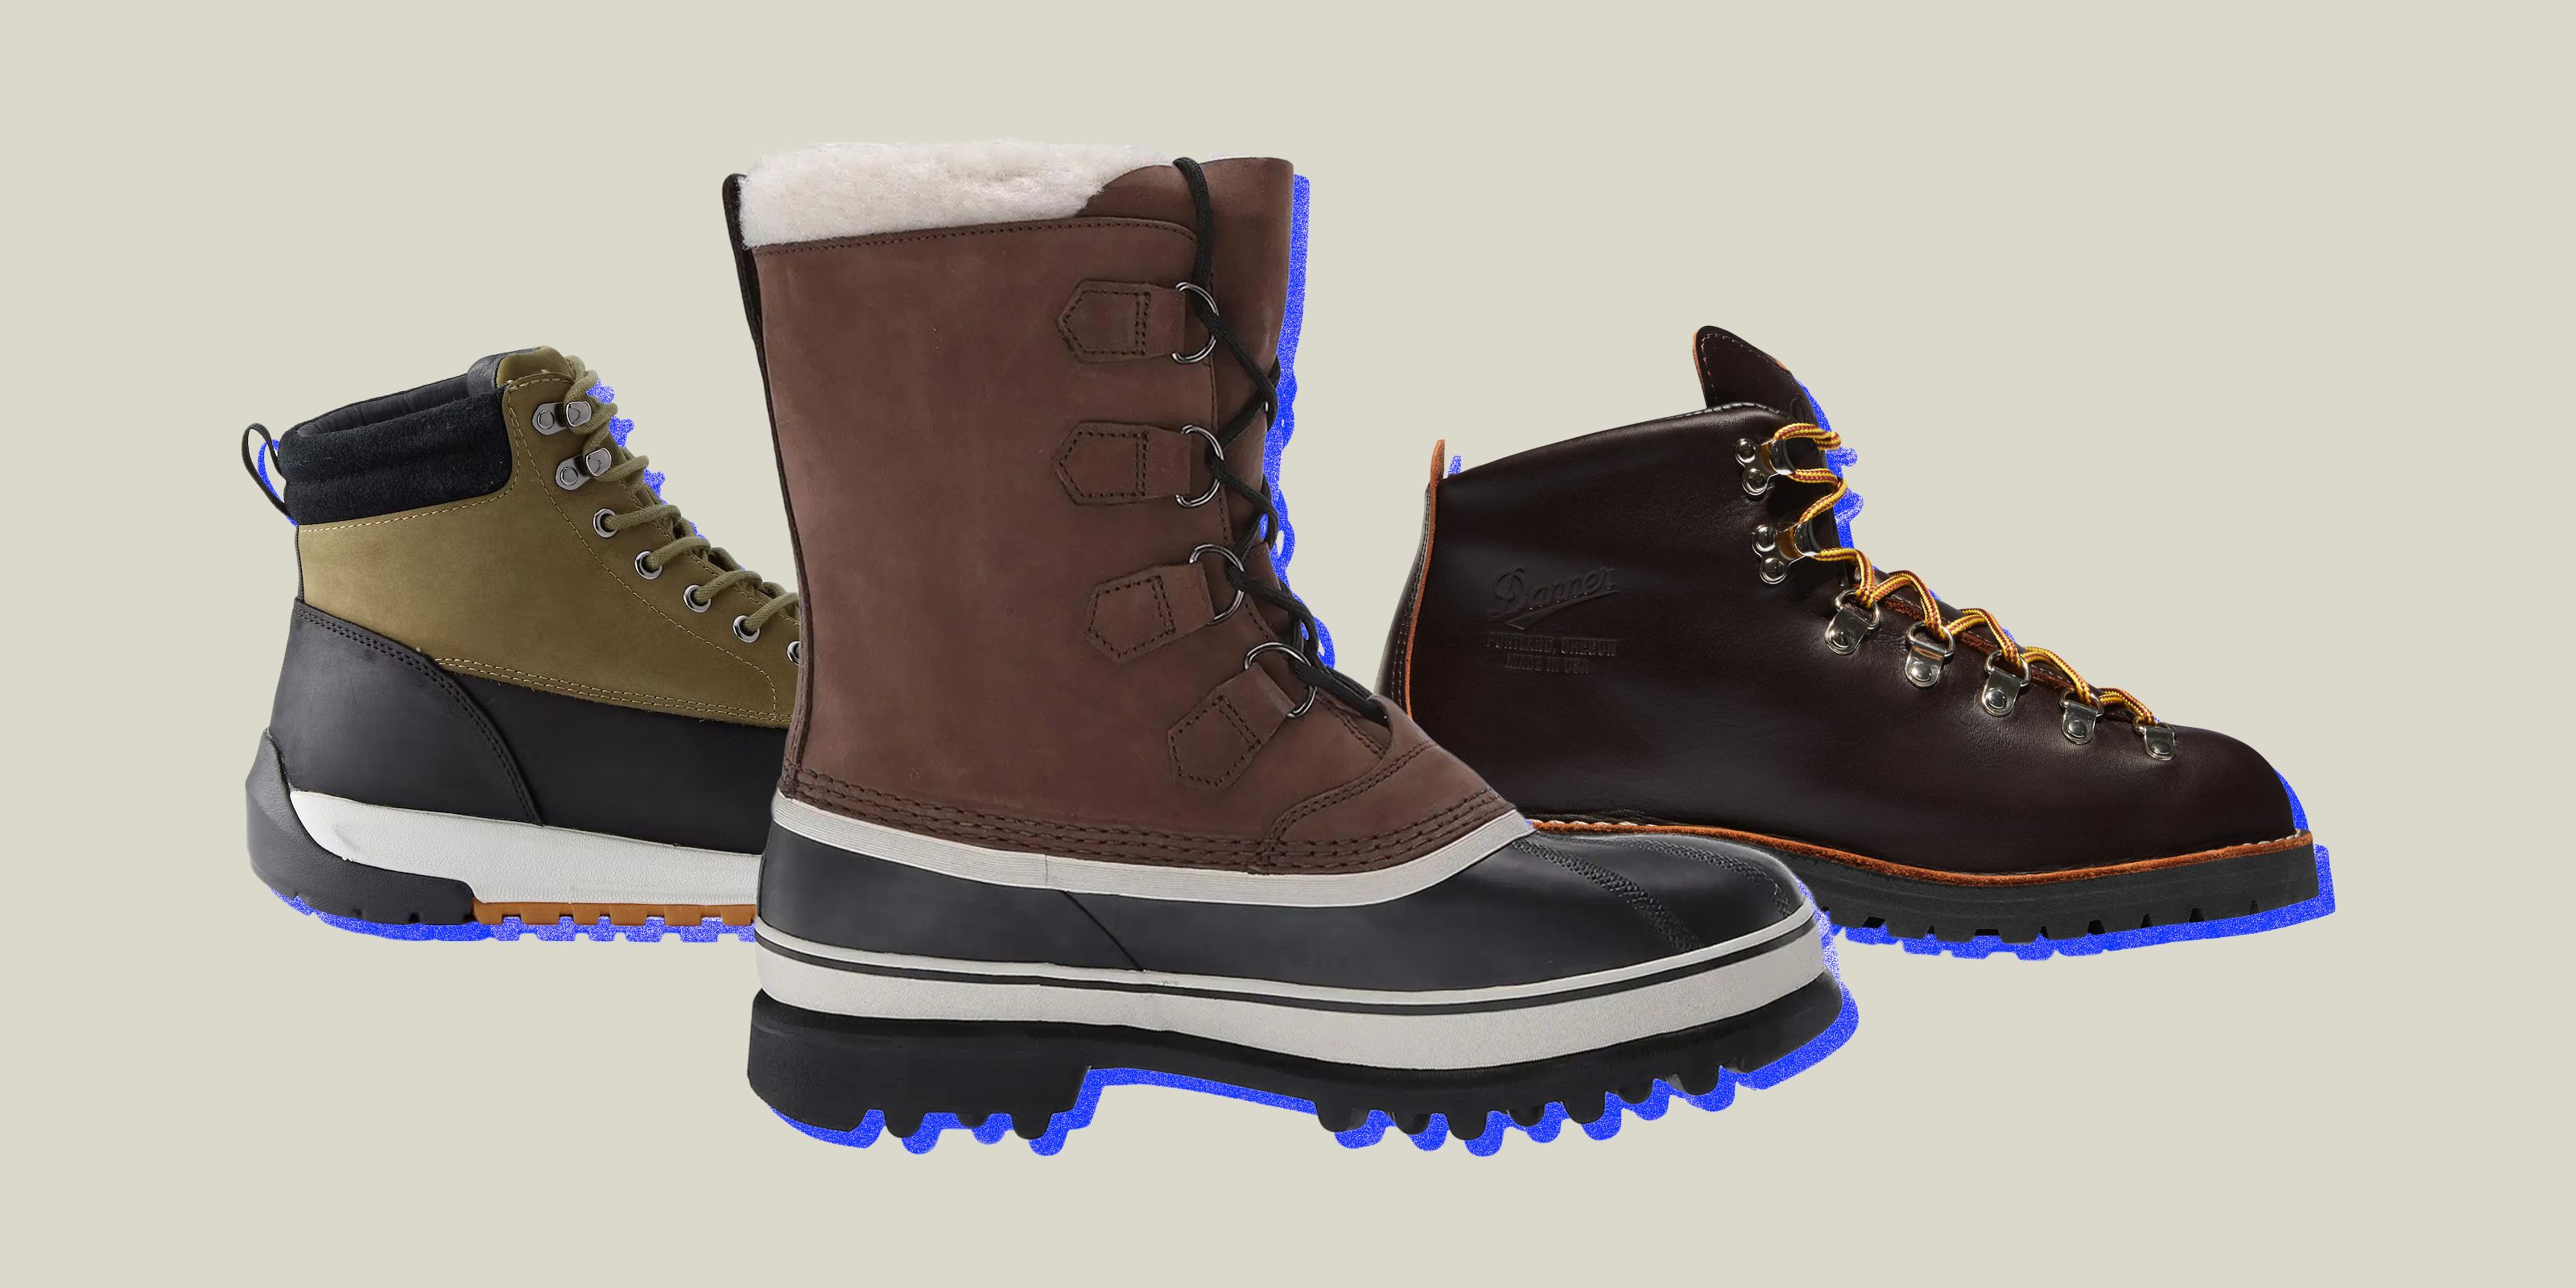 Vies leveren Verlengen The Best Snow Boots for Men to Keep Their Feet Warm